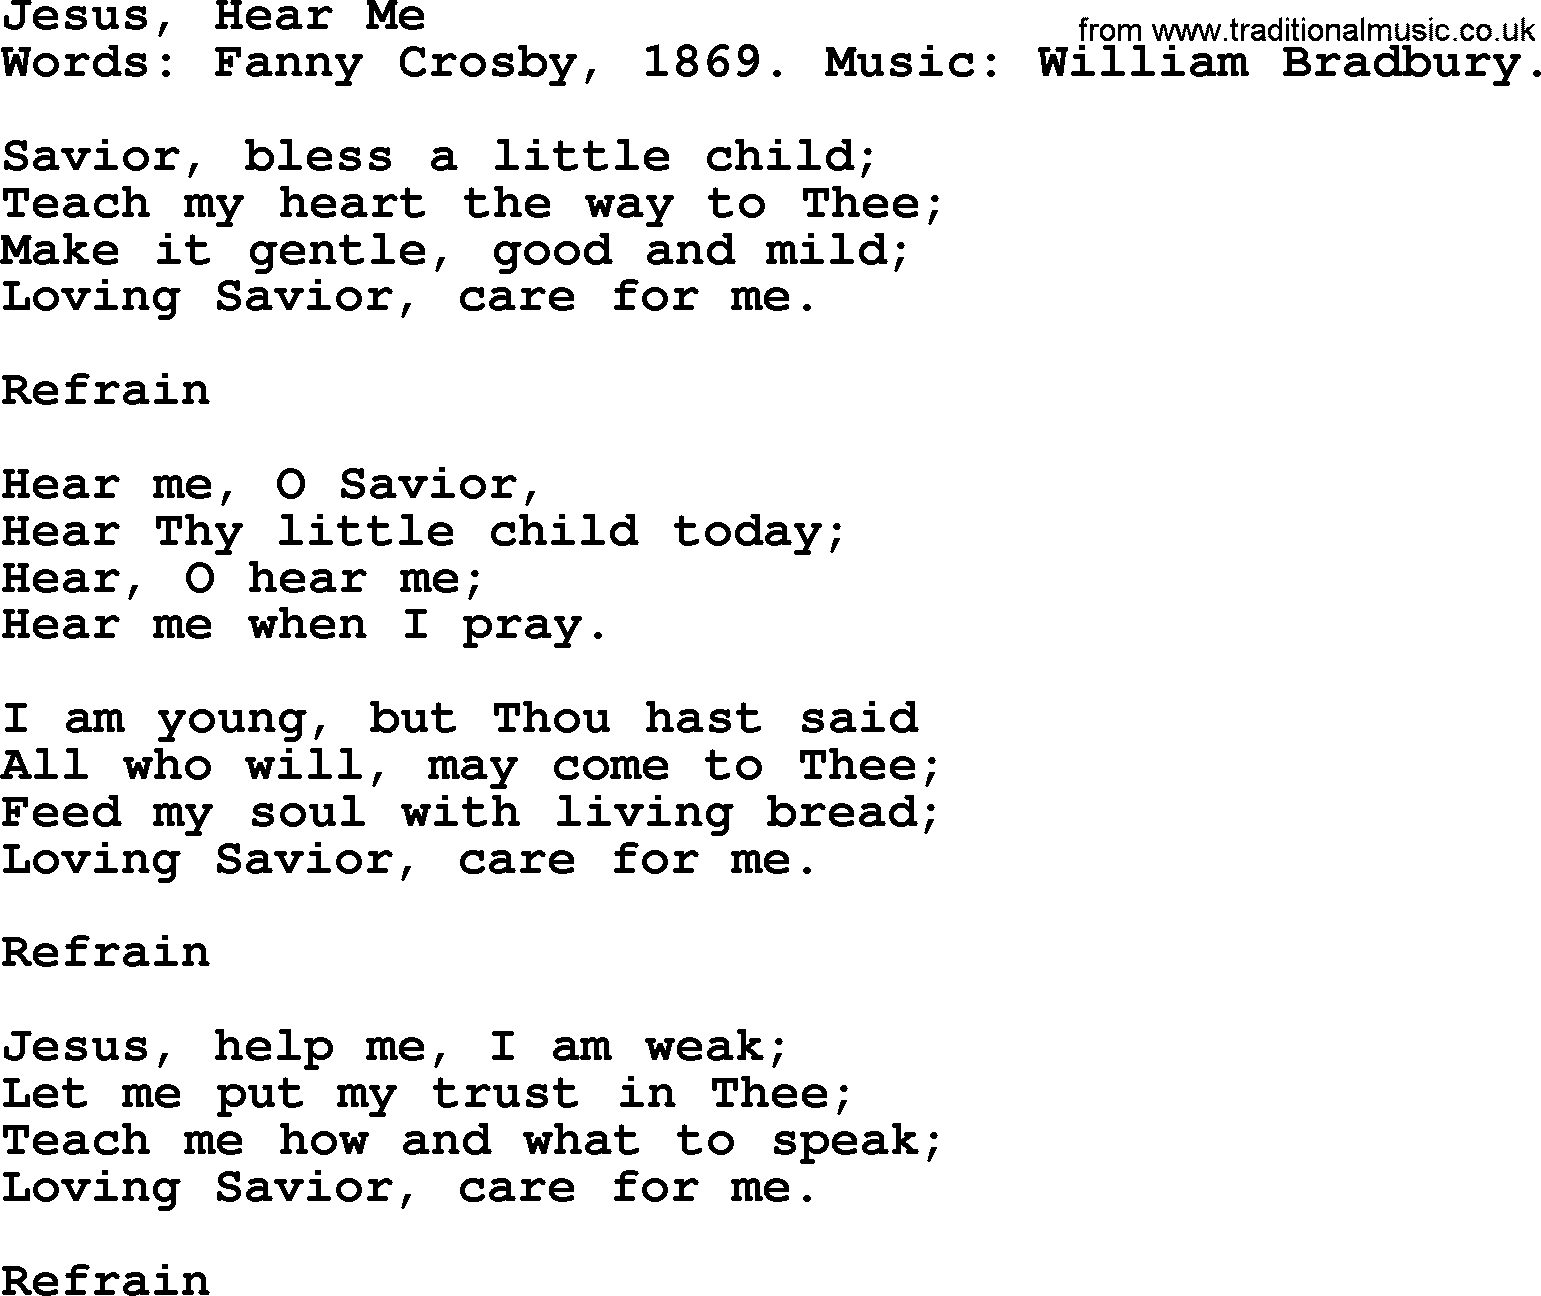 Fanny Crosby song: Jesus, Hear Me, lyrics